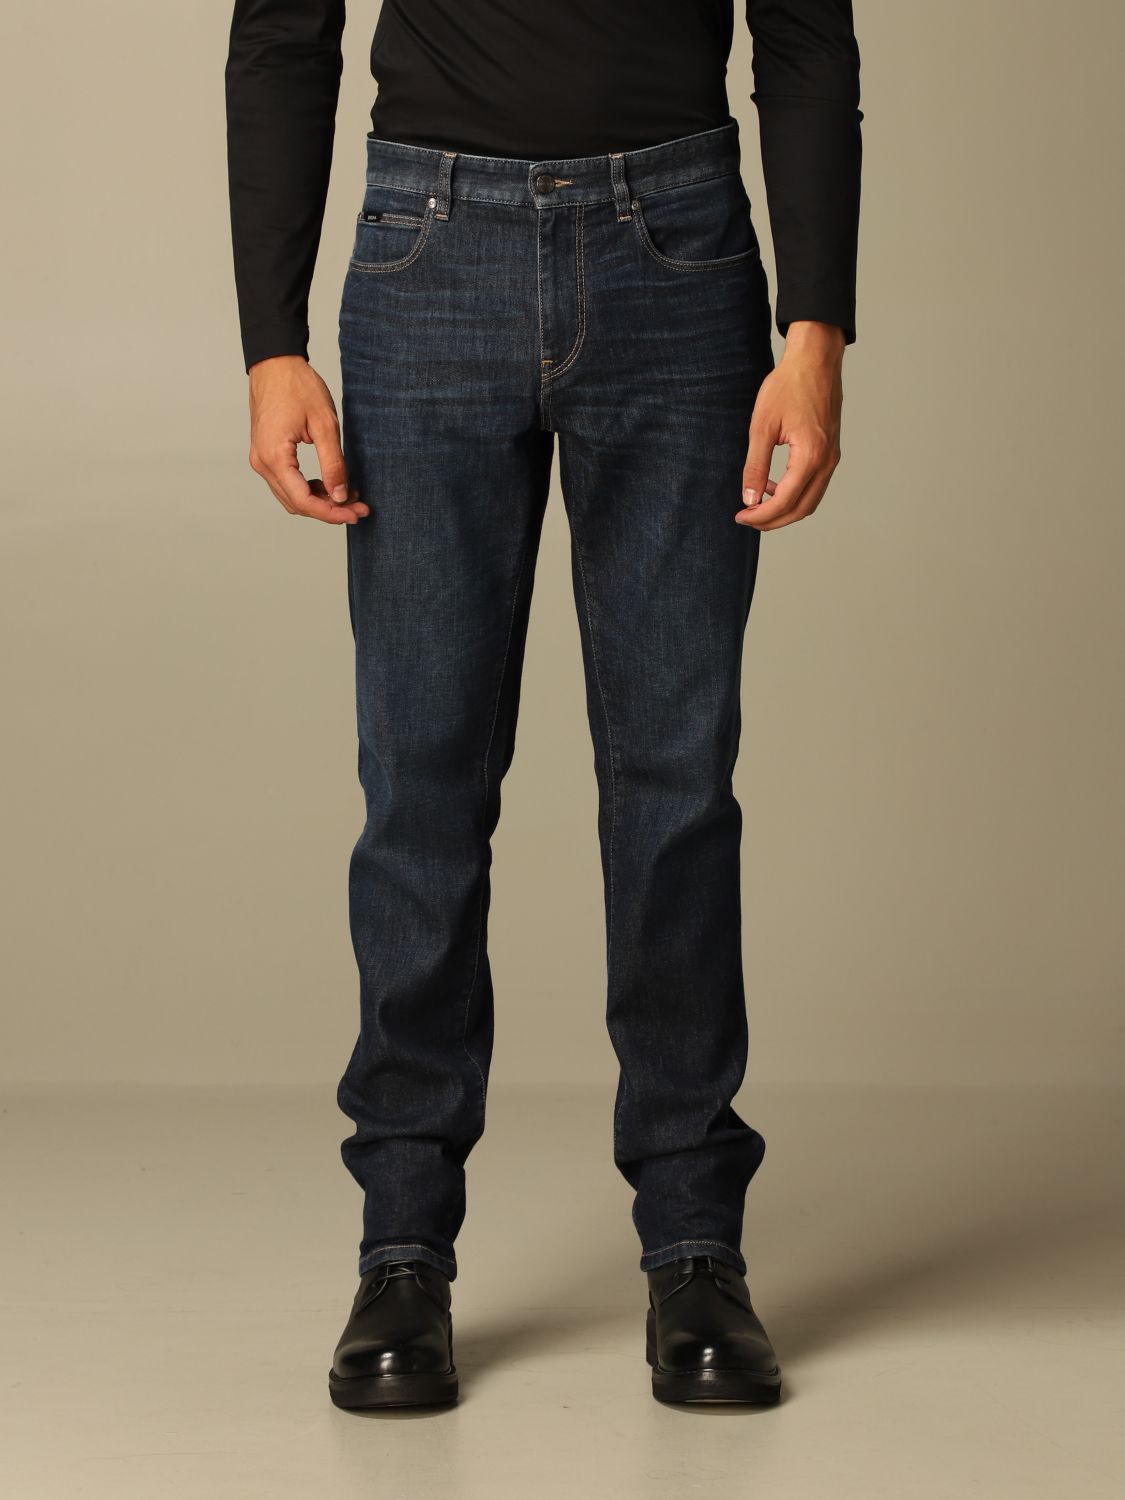 Z Zegna Outlet: jeans with 5 pockets | Jeans Z Zegna Men Blue | Jeans Z